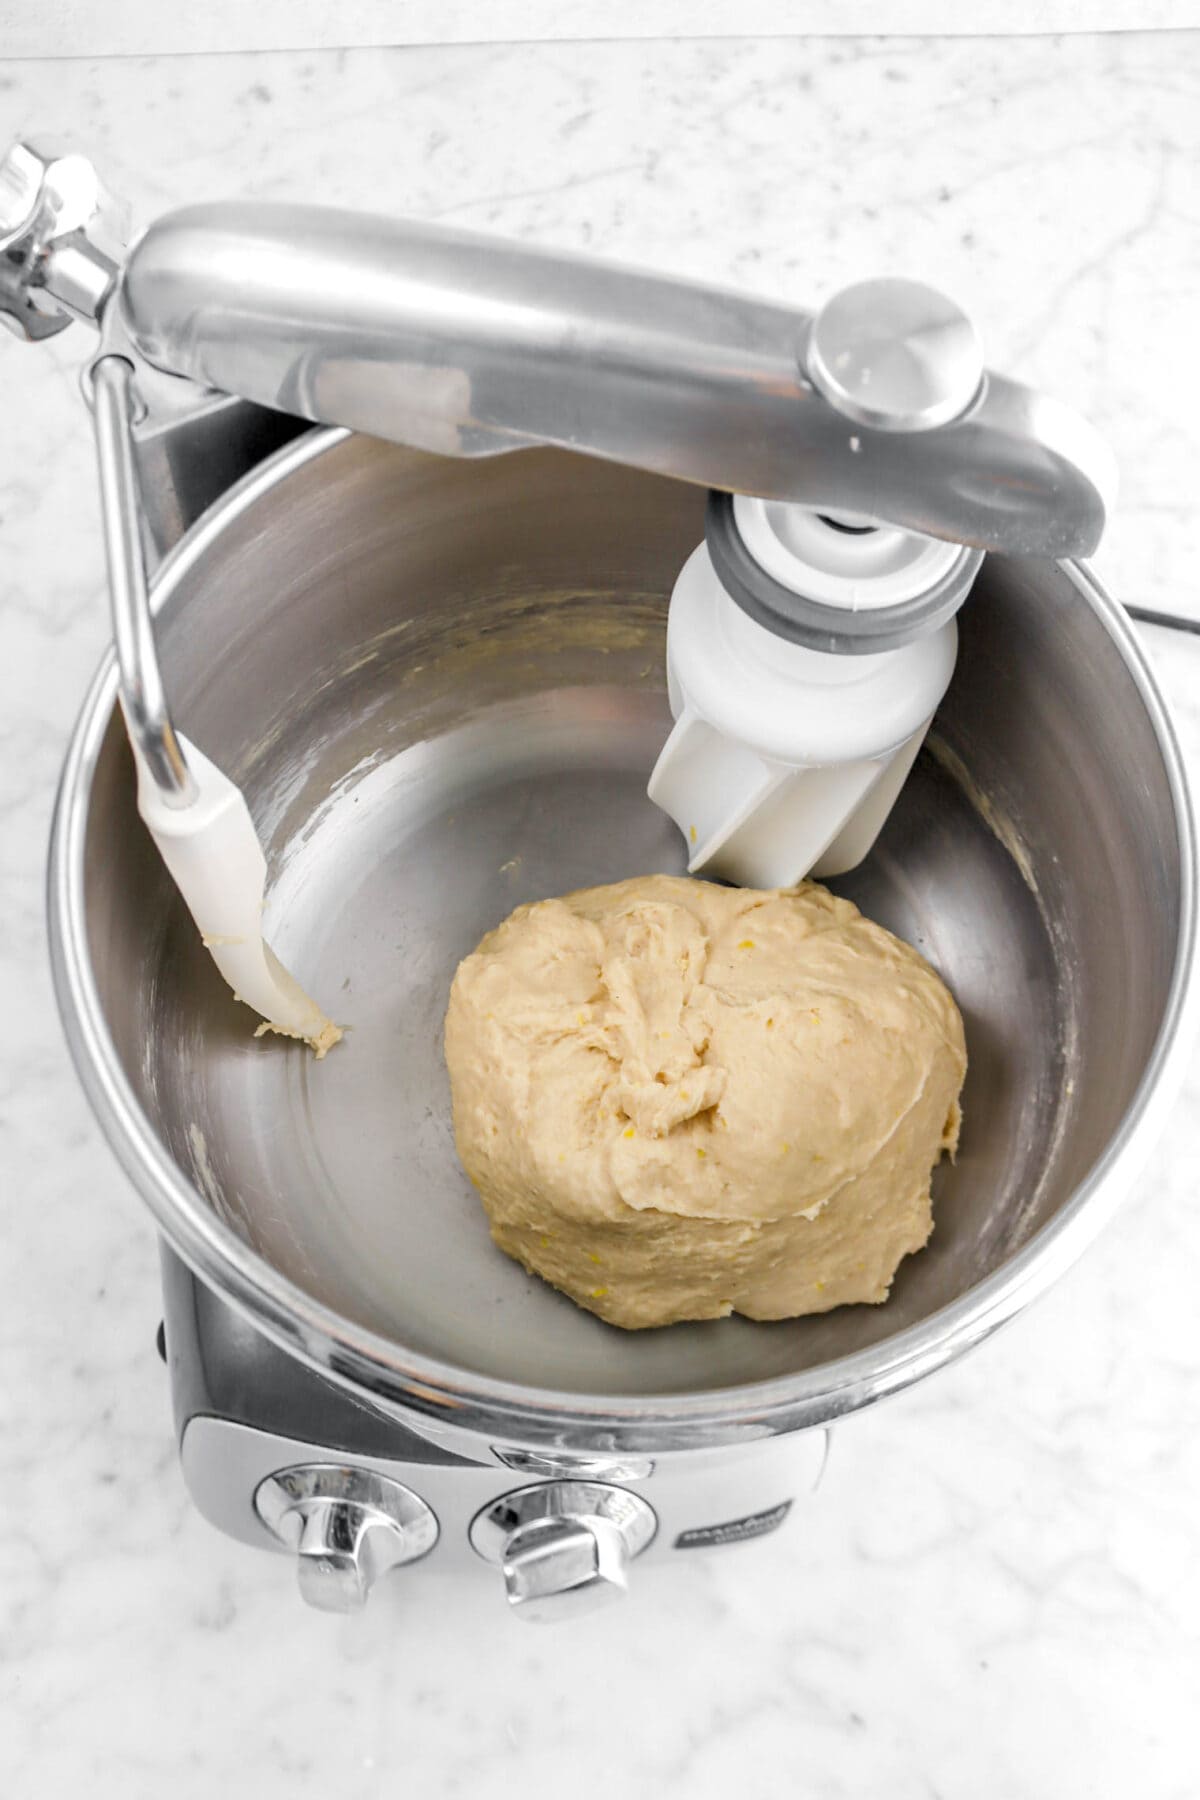 rough dough in bowl of mixer